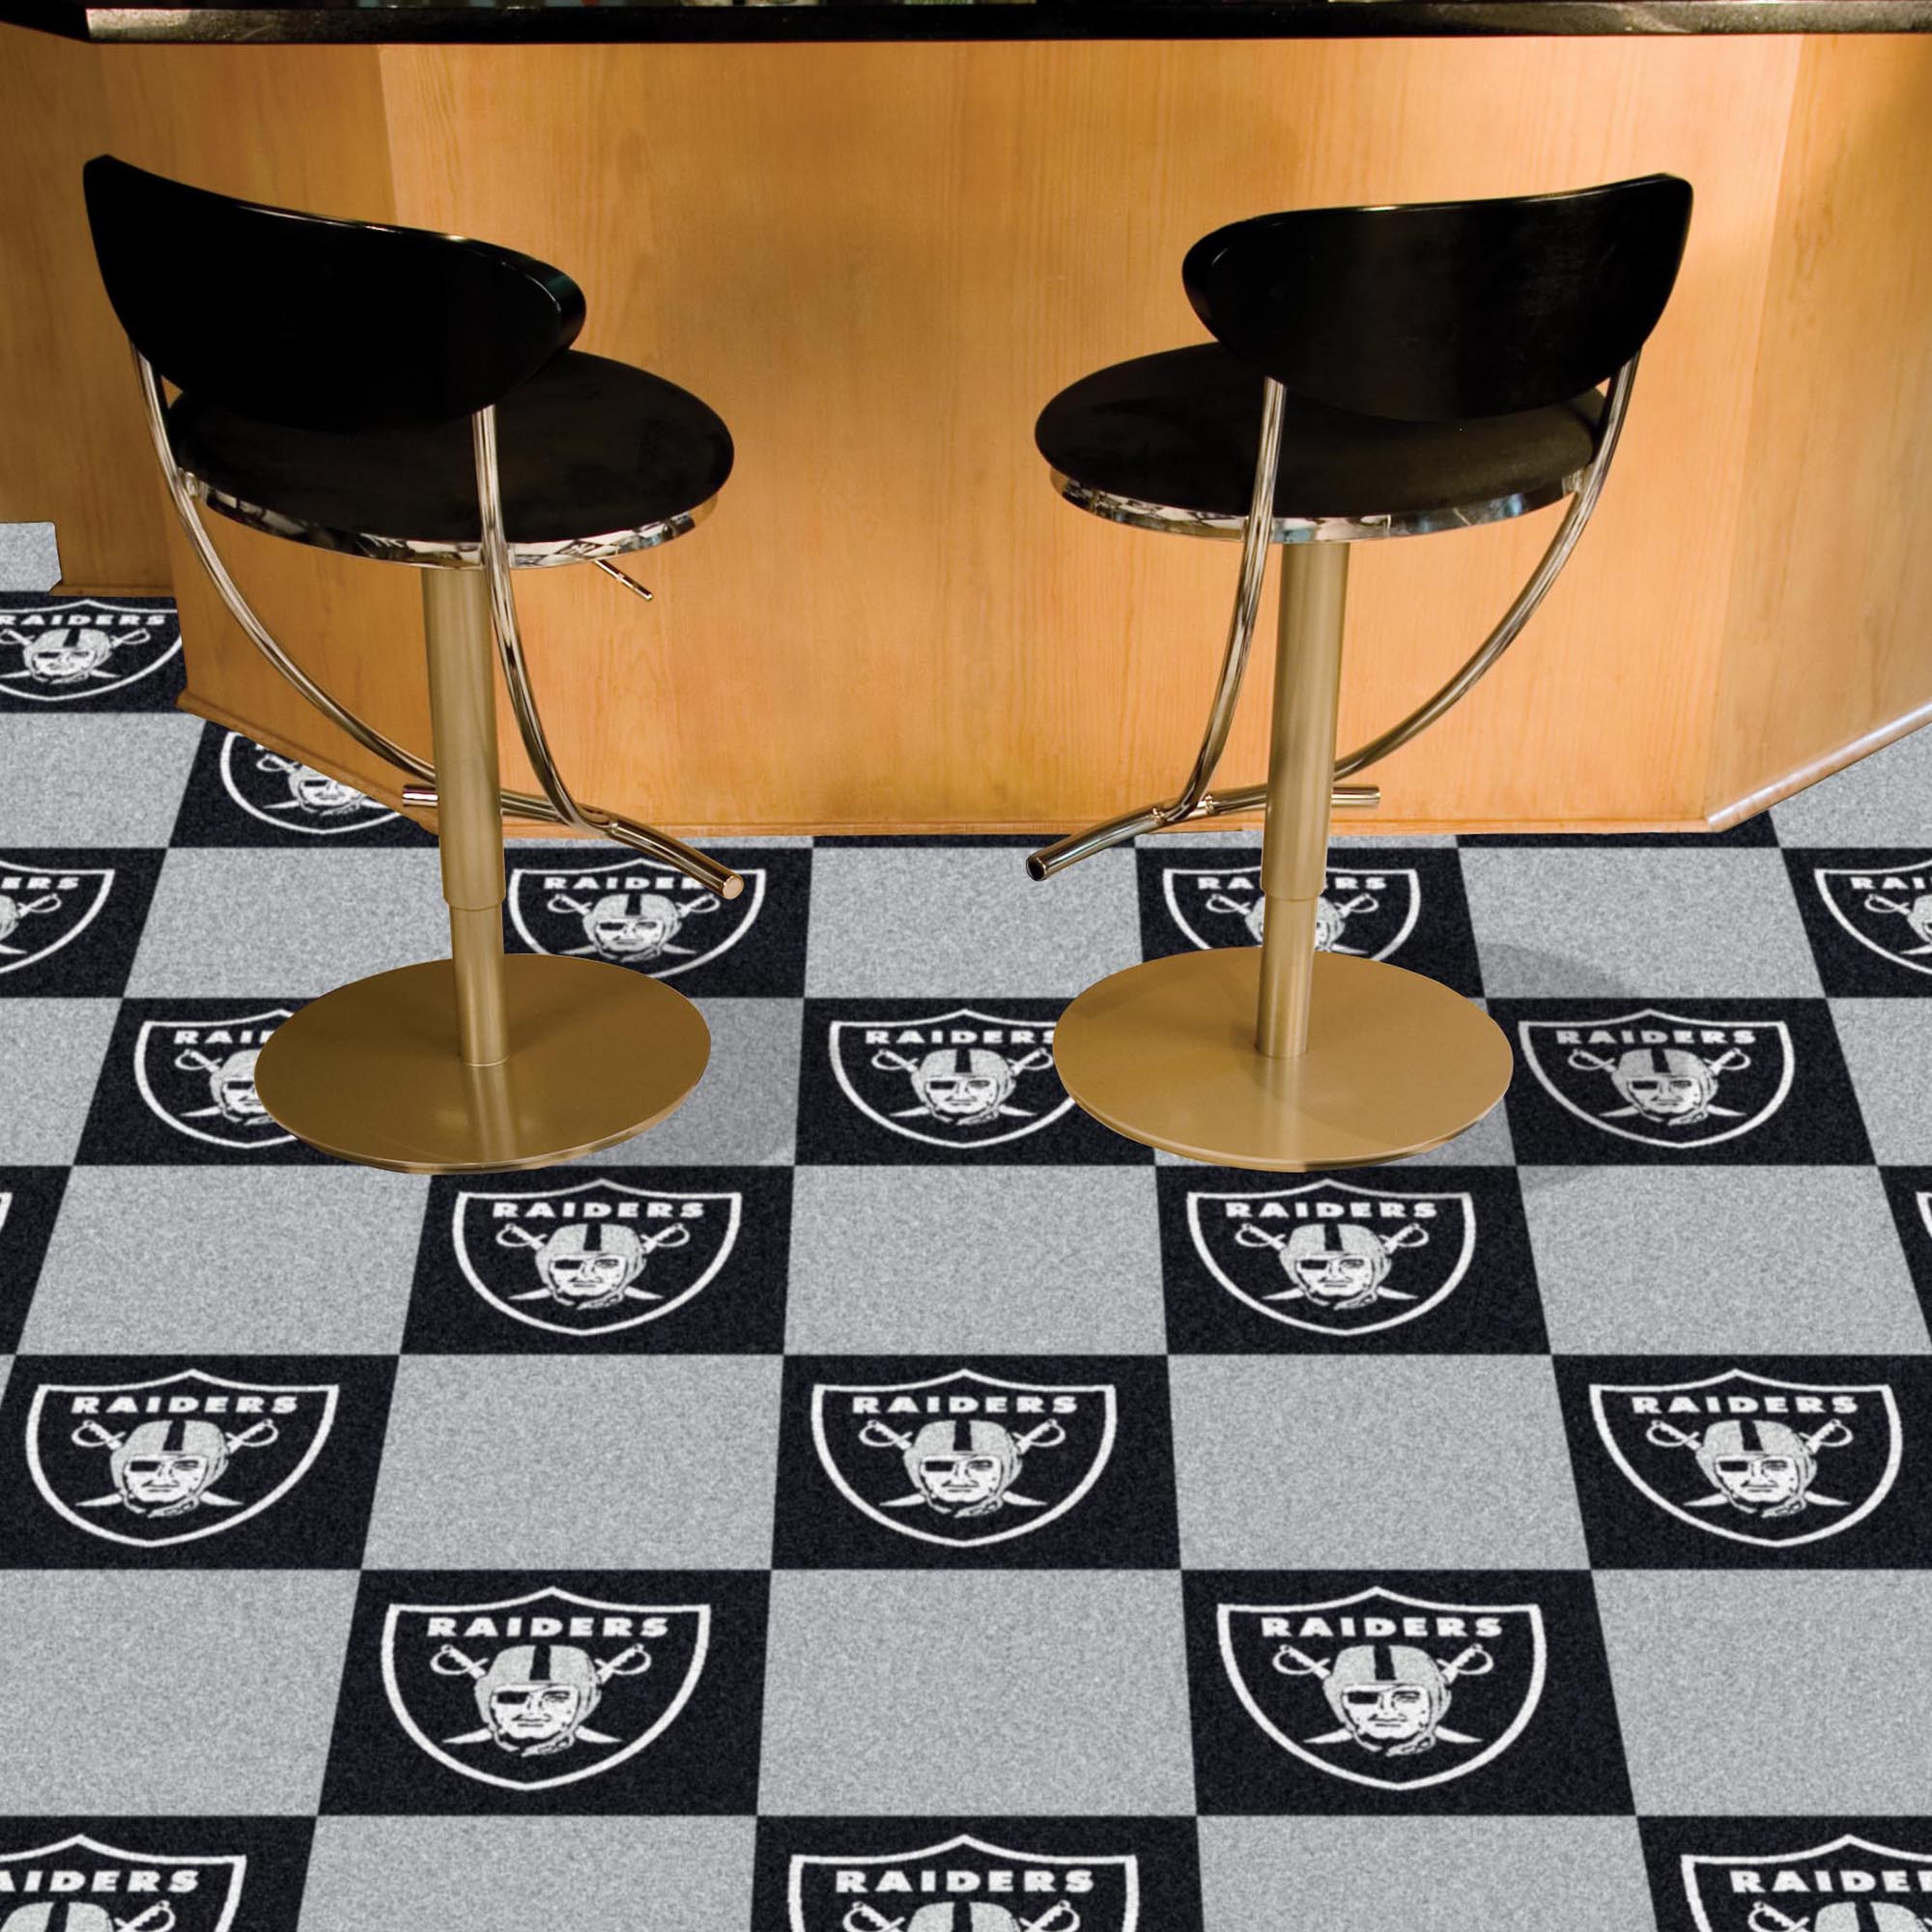 Las Vegas Raiders Carpet Tiles 18x18 in.